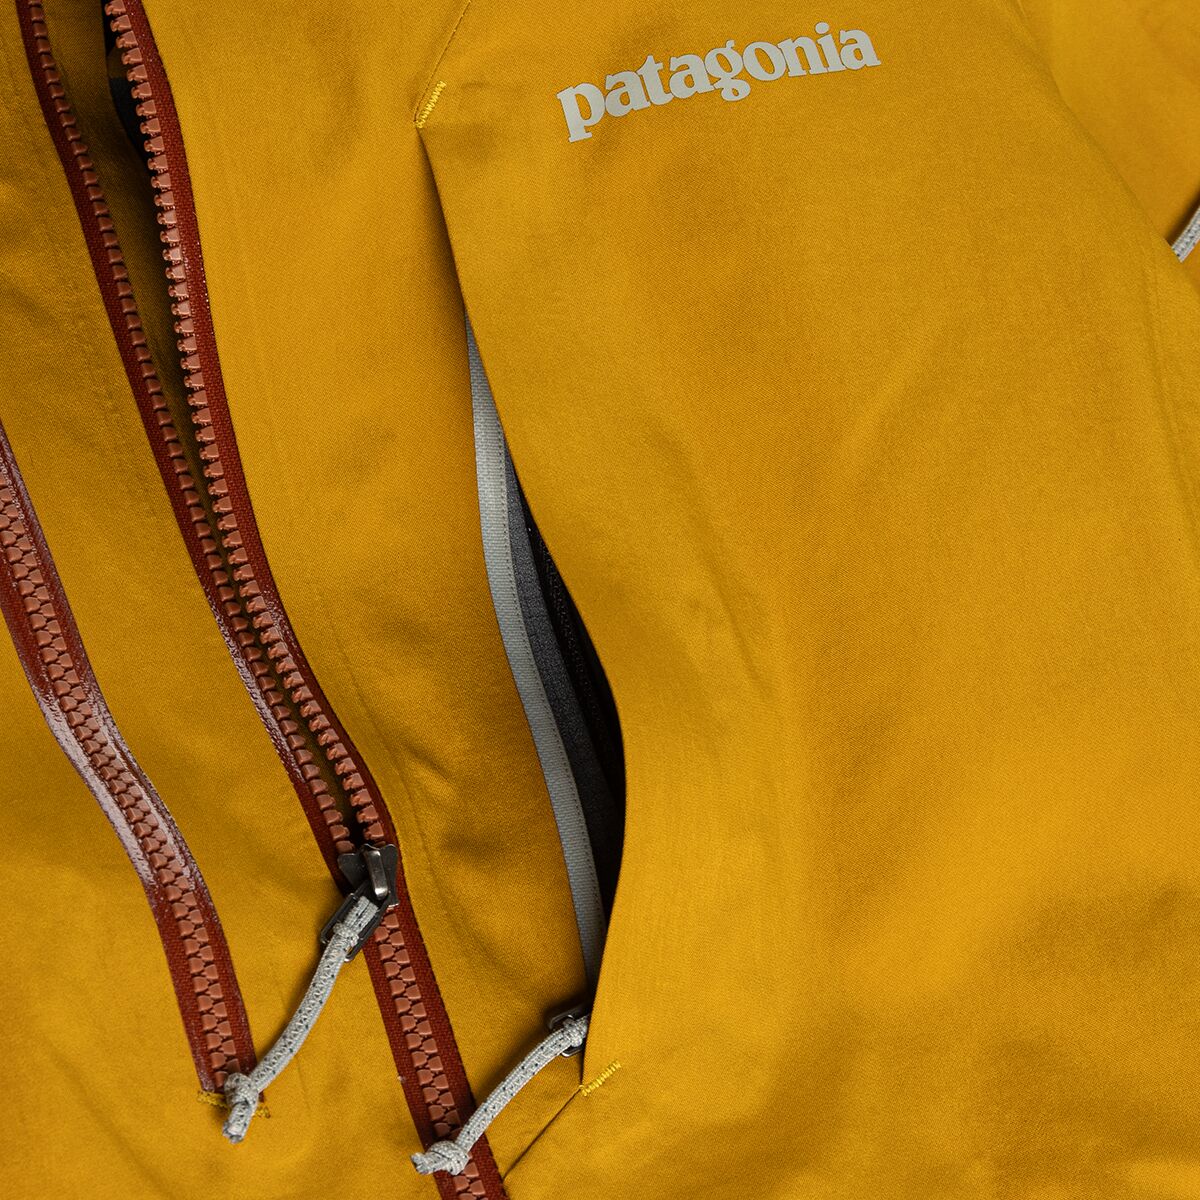 Patagonia / Women's PowSlayer Jacket - 30313 - XL - Locally